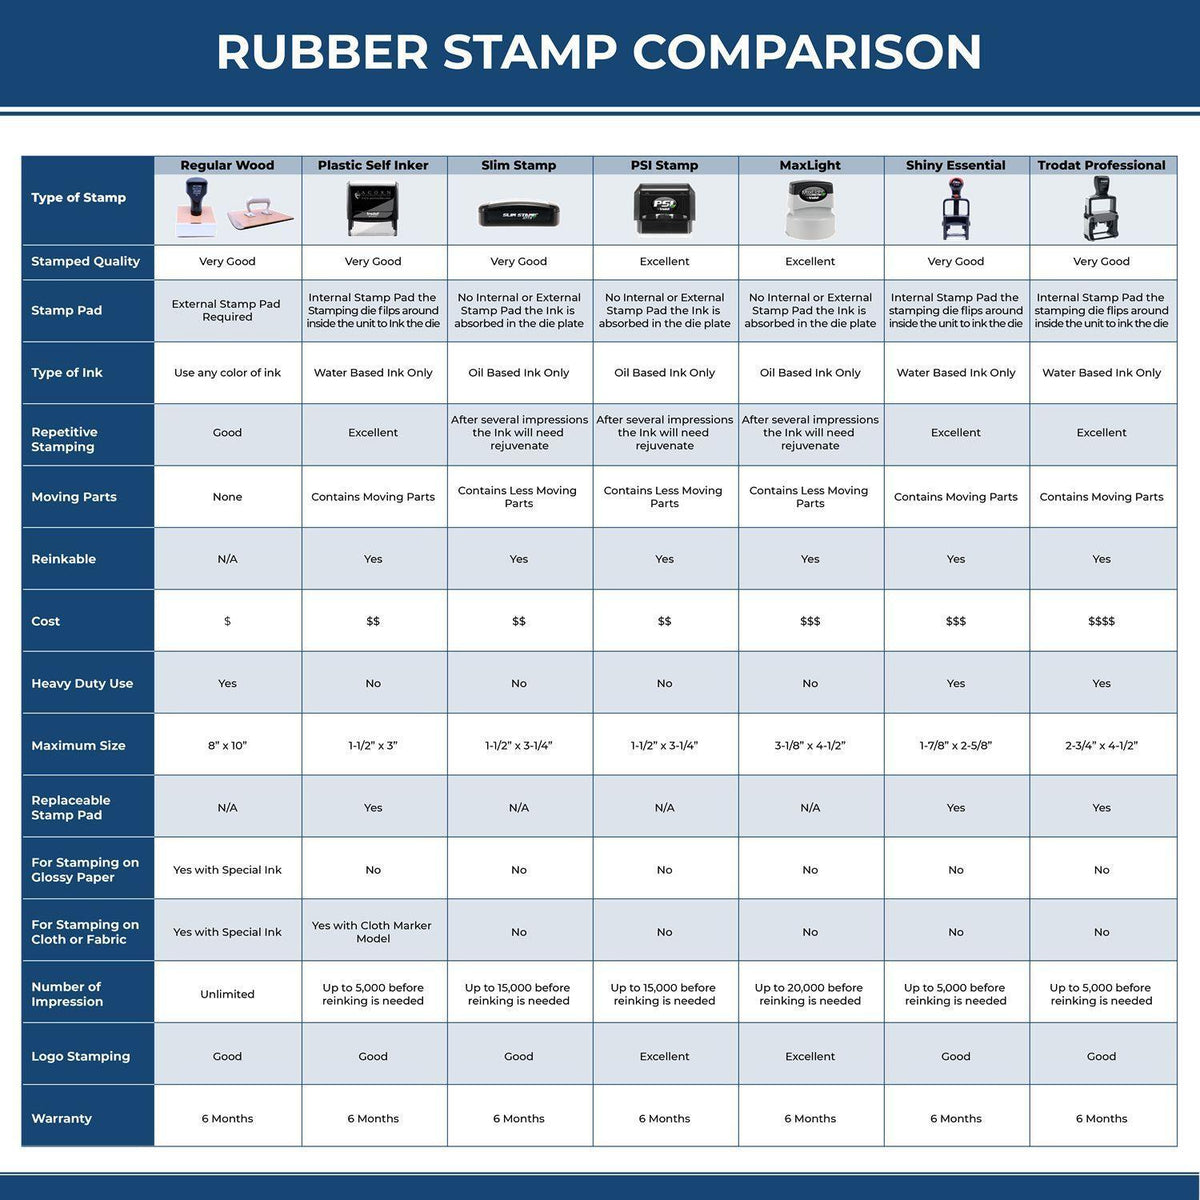 Large Blue Shield Rubber Stamp 4533R Rubber Stamp Comparison